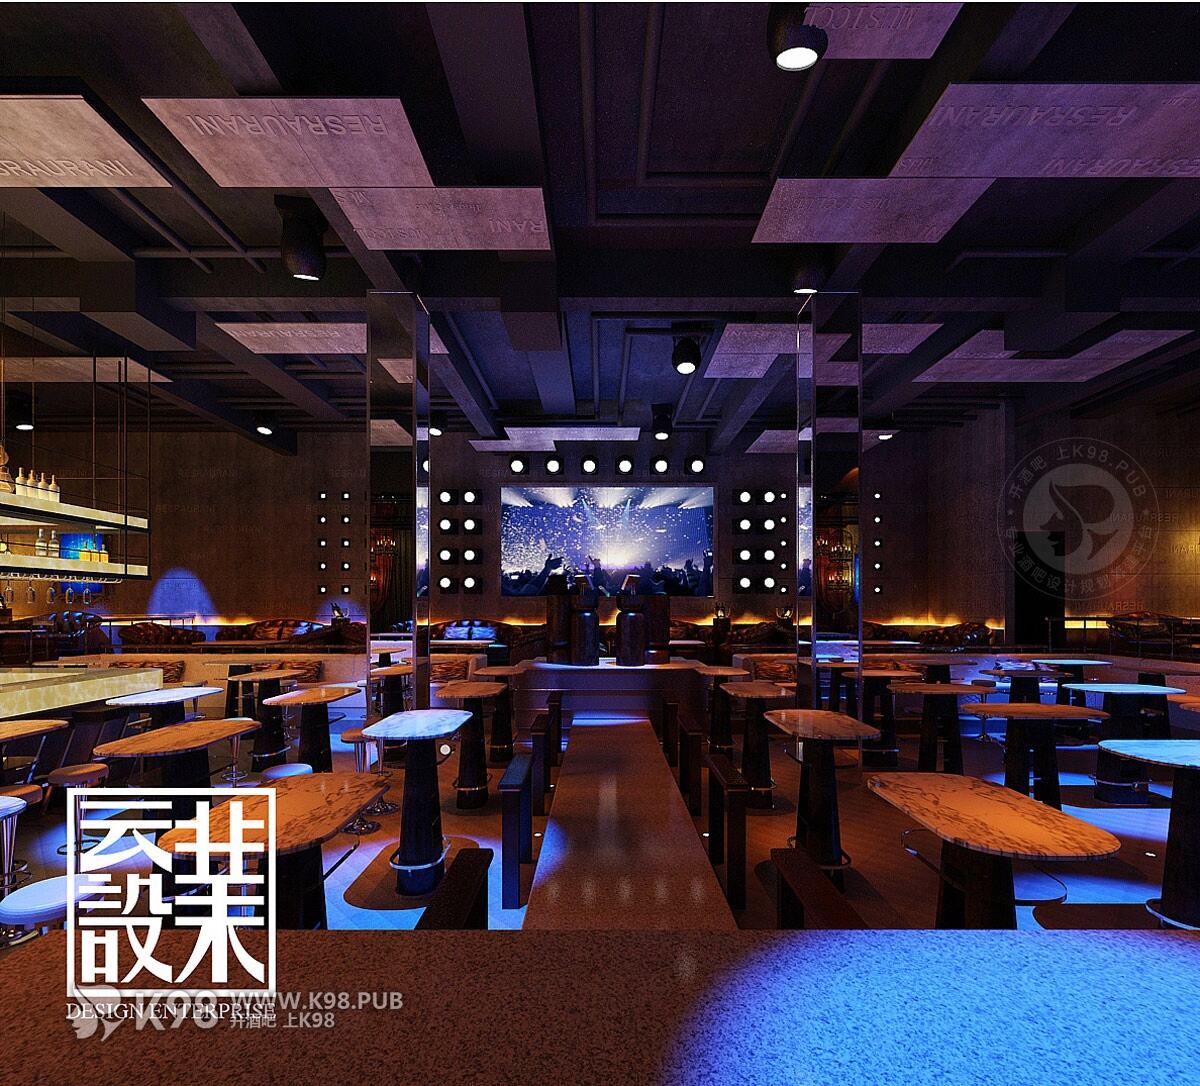 THE 1th CLUB酒吧设计图-大厅